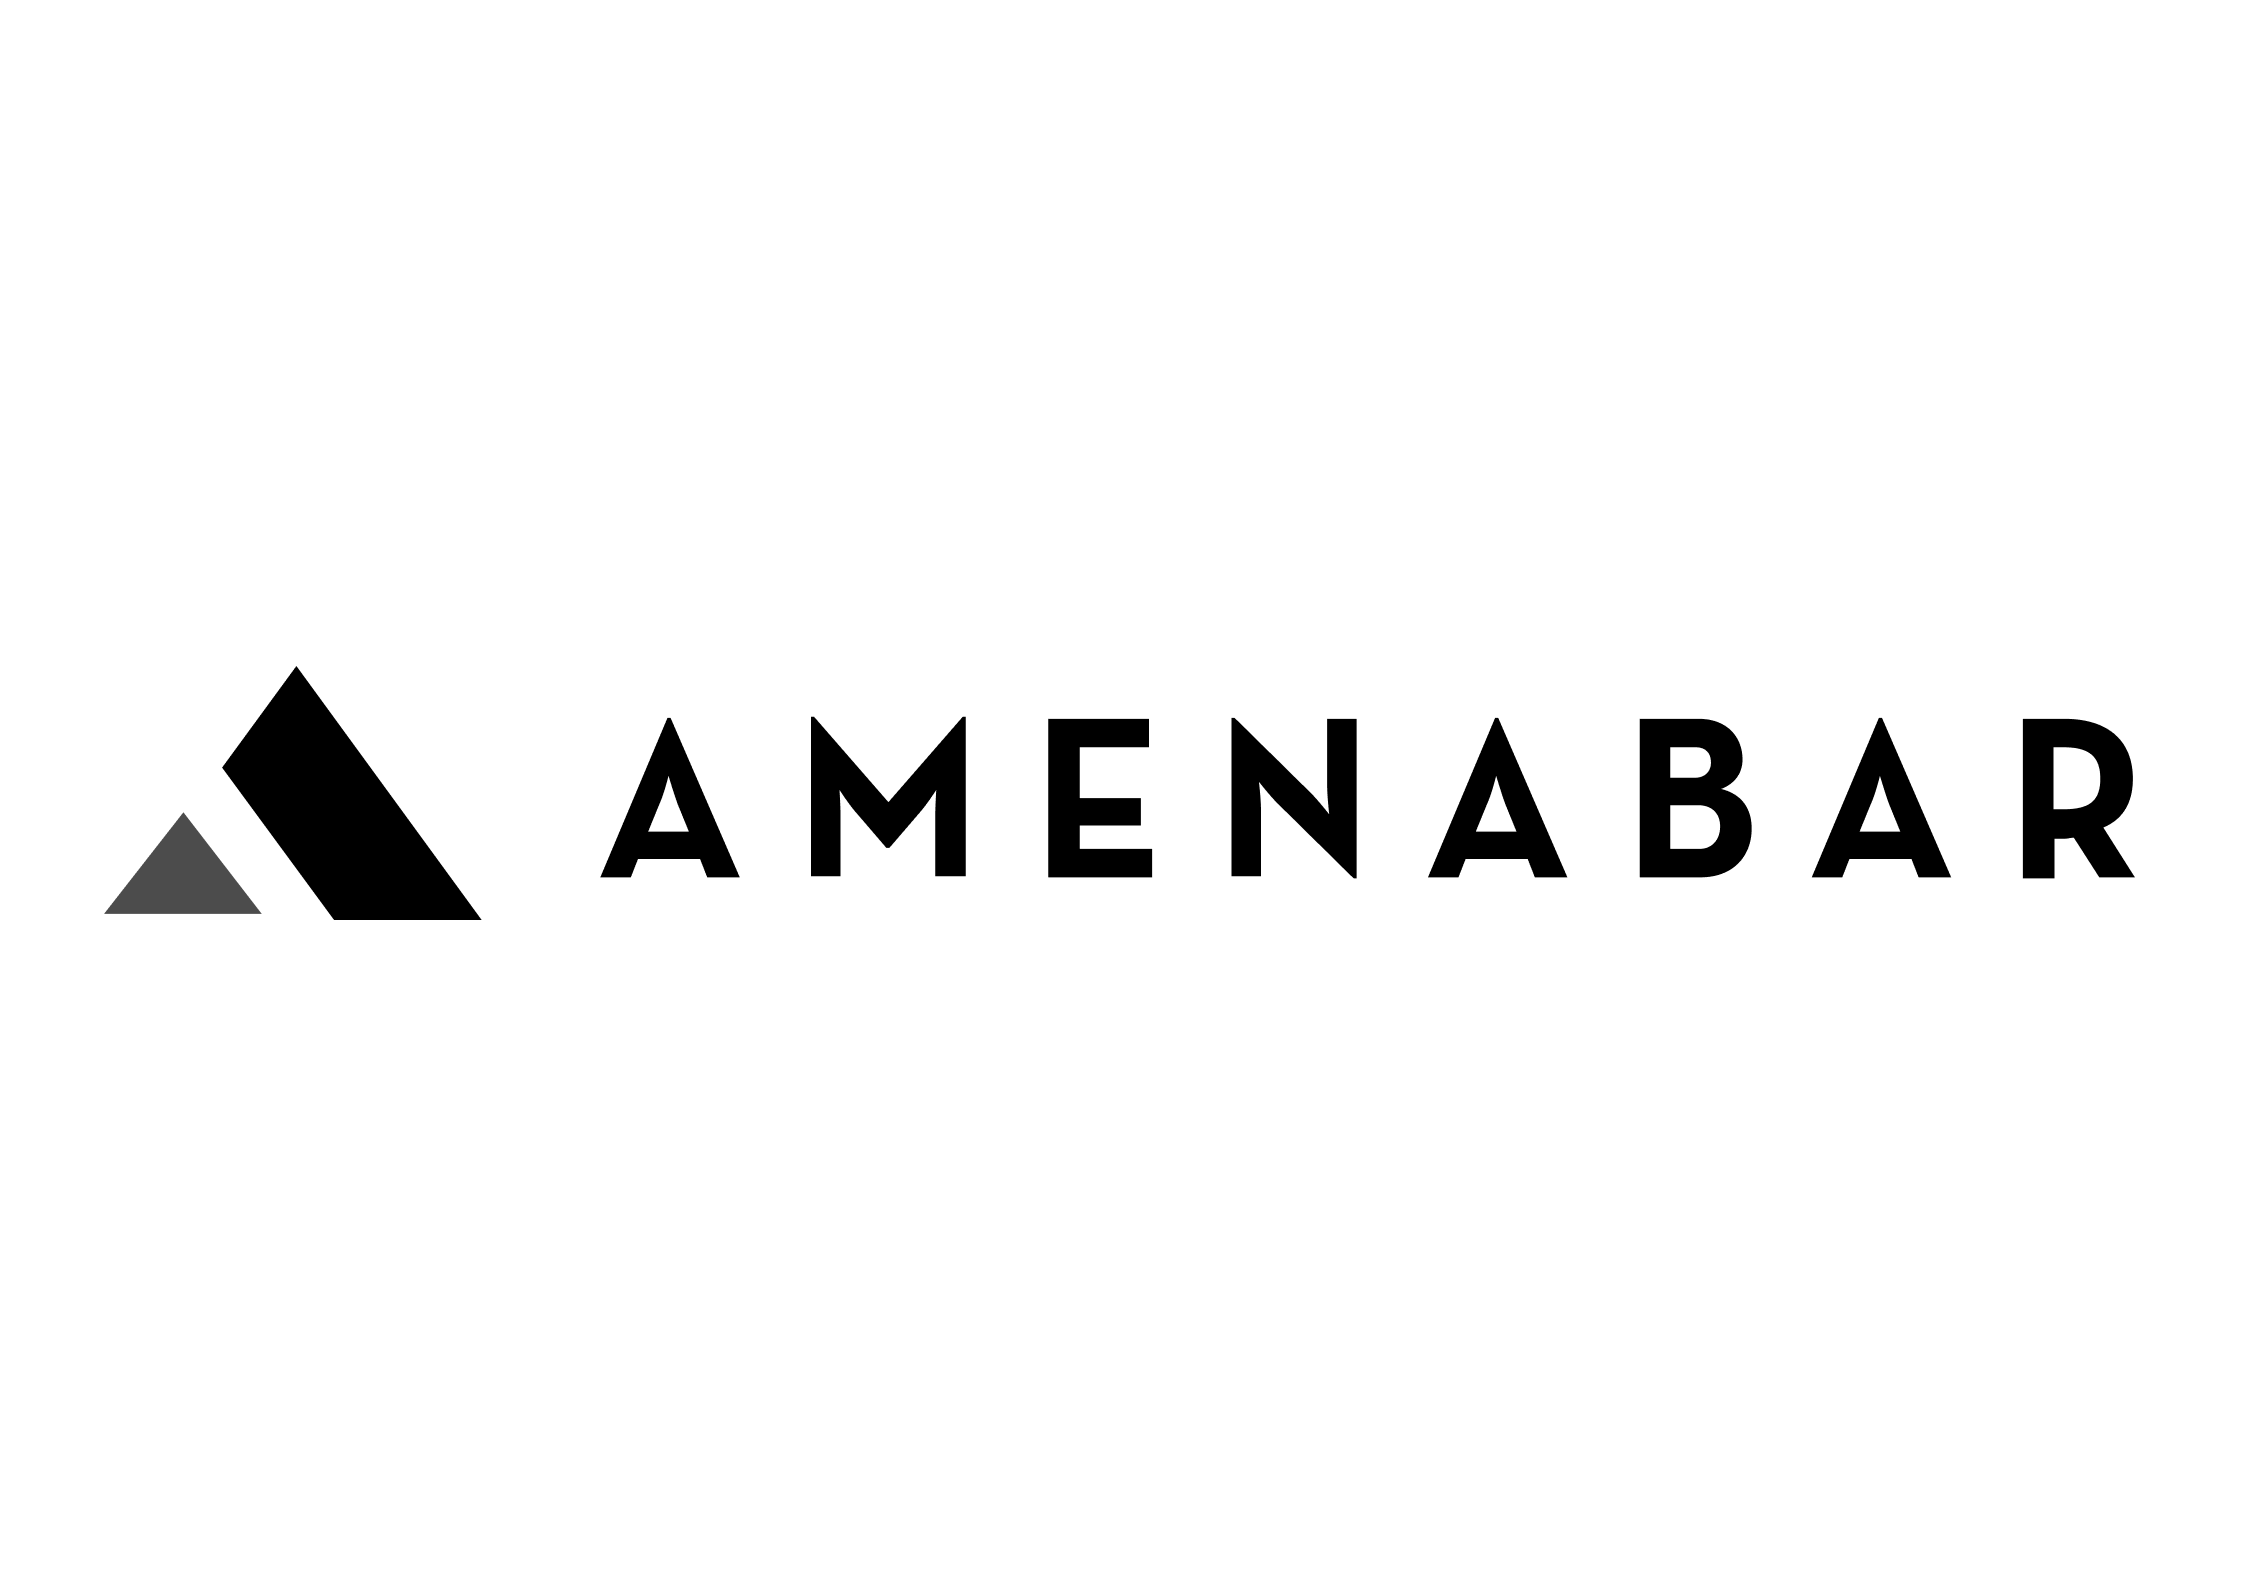 Logo Amenabar